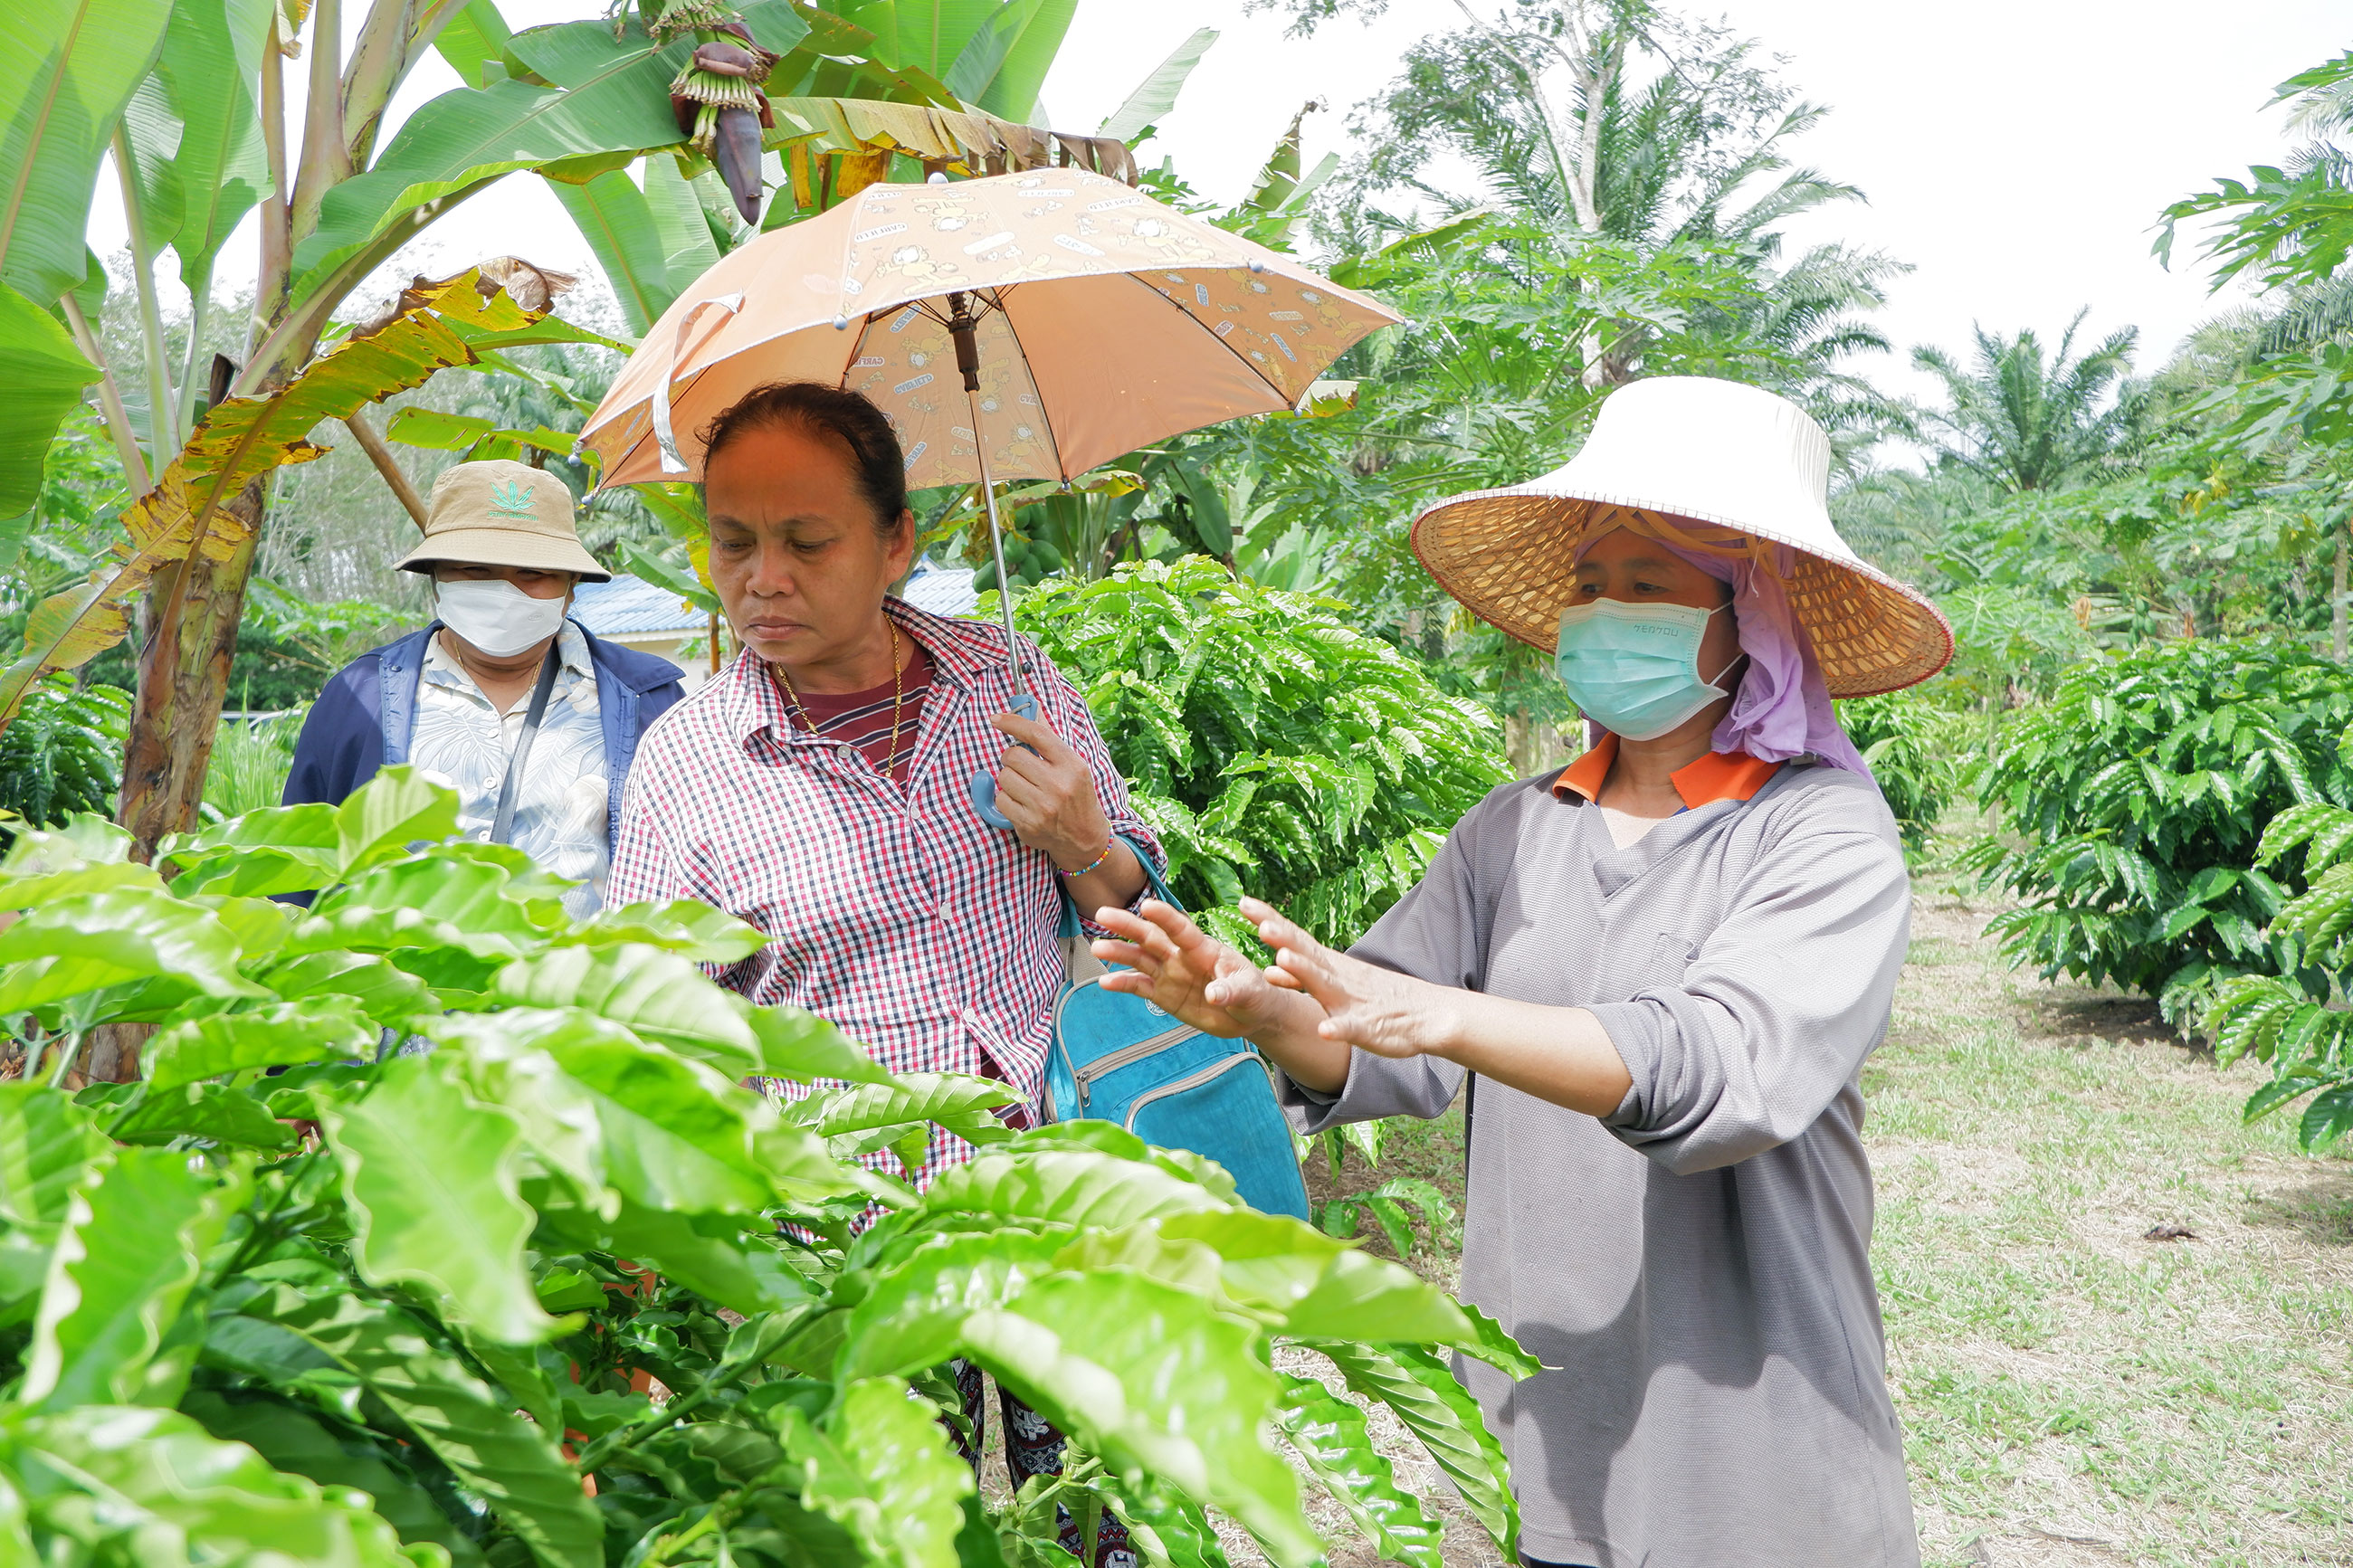 Ms. Kan Raksanit, owner of the coffee demonstration plot at Chai Rat, Bang Saphan Noi District, Prachuap Khiri Khan province, shared her experiences of coffee farm management with farmer members from Huai Nai Roi Community Coffee Farmer Group. (คุณก้าน รักสนิท เจ้าของแปลงรวบรวมสายพันธุ์กาแฟโรบัสต้า และแปลงสาธิตการปลูกพืชกาแฟร่วมกับพืชชนิดอื่น ที่ ต.ไชยราช อ.บางสะพานน้อย จ.ประจวบคีรีขันธ์ อธิบายการดูแลจัดการต้นกาแฟให้กับสมาชิกเกษตรกรกลุ่มผู้ปลูกกาแฟห้วยนายร้อยที่มาศึกษาดูงาน)